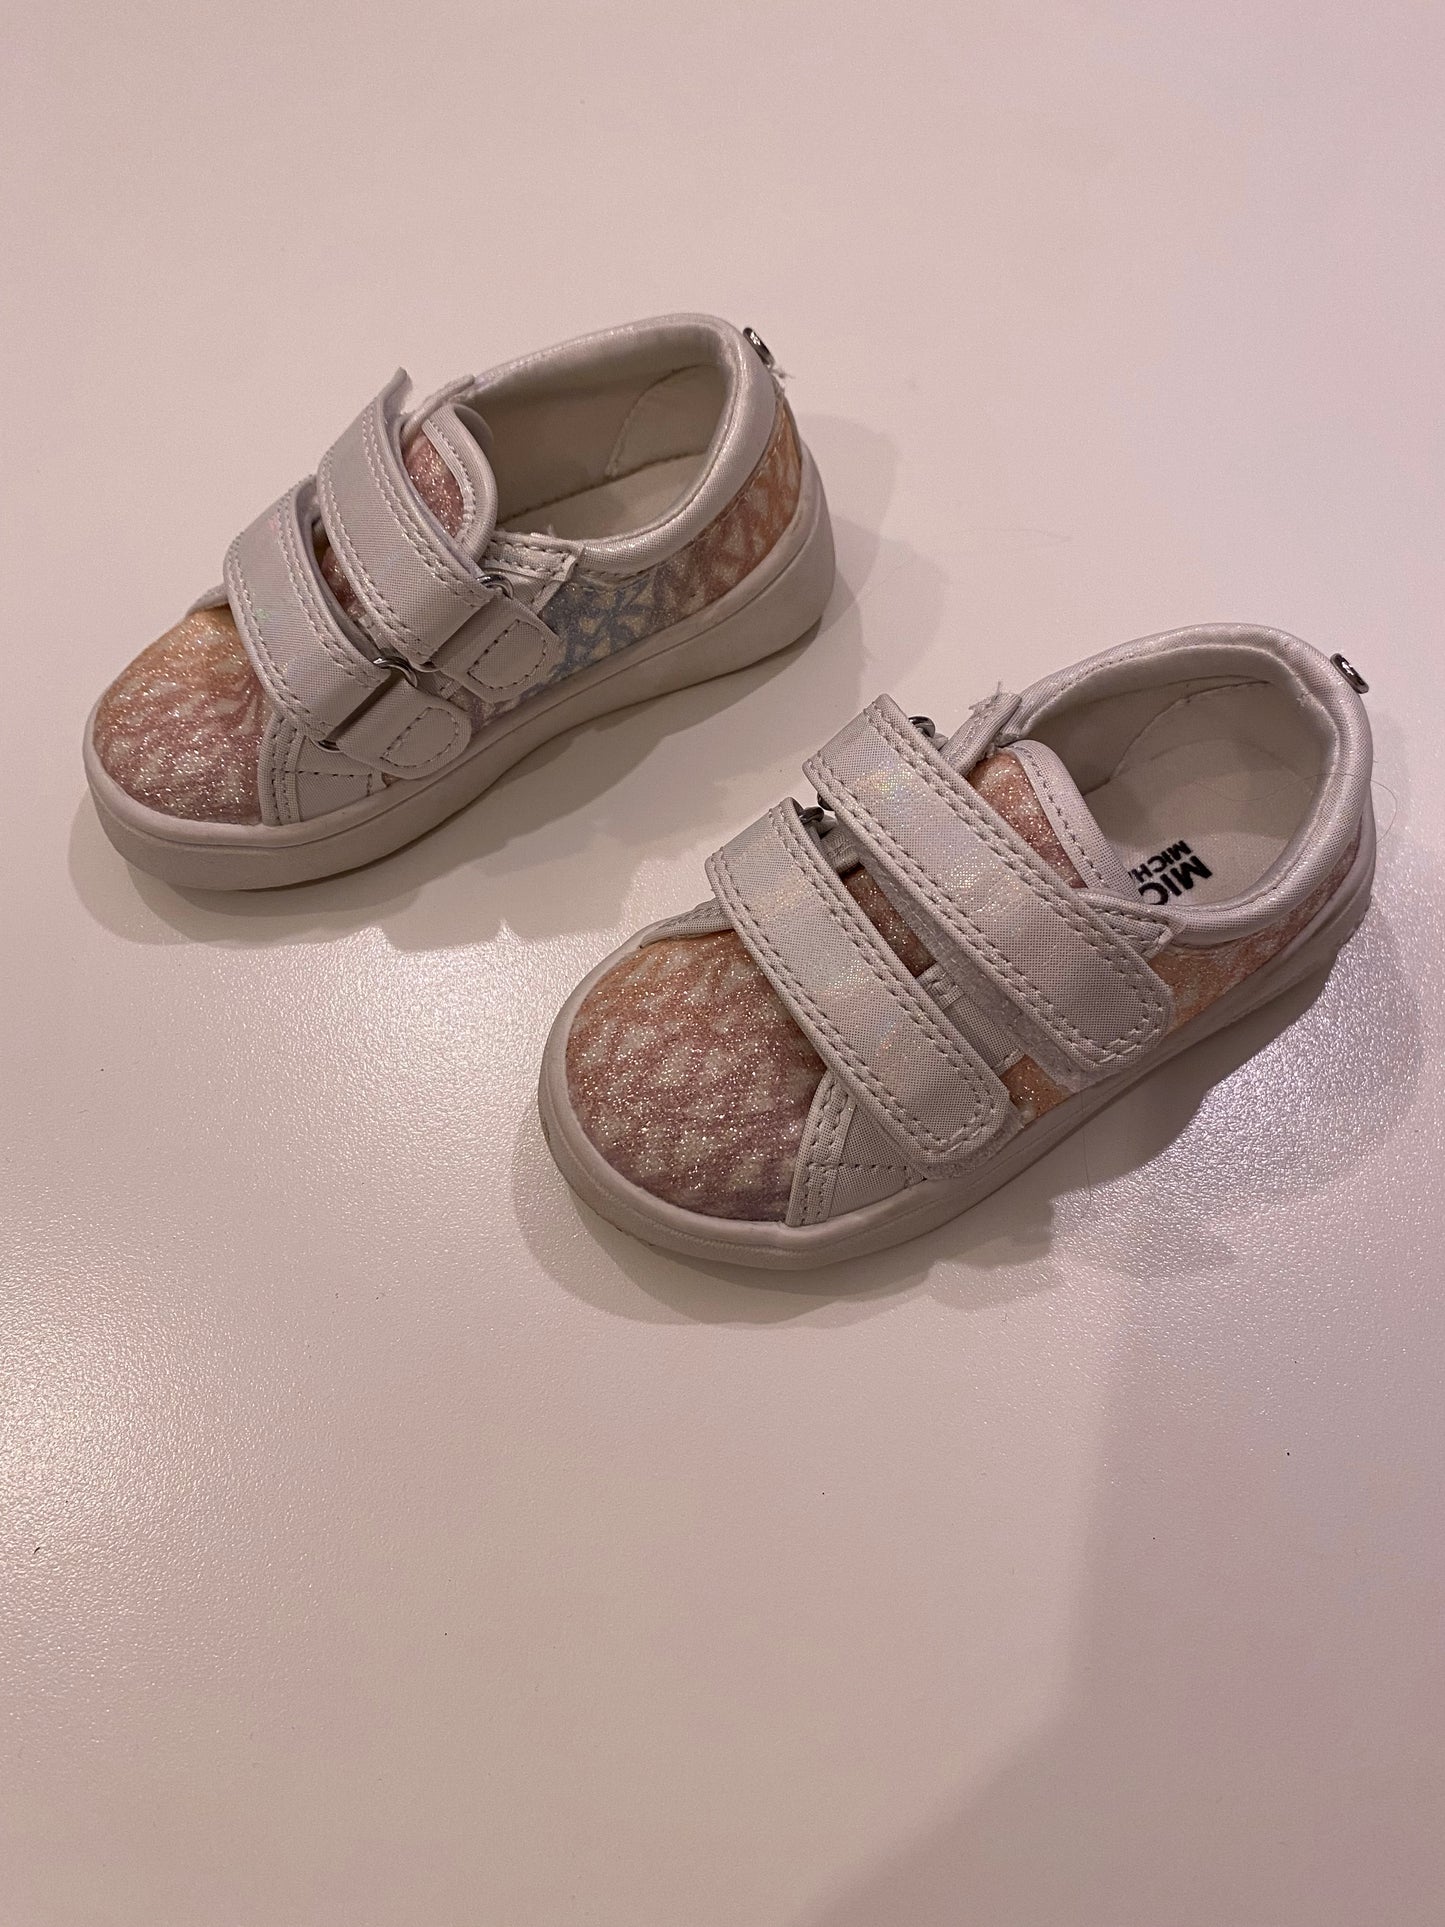 Michael Kors Rainbow Sparkle print tennis shoes Girls Size 6